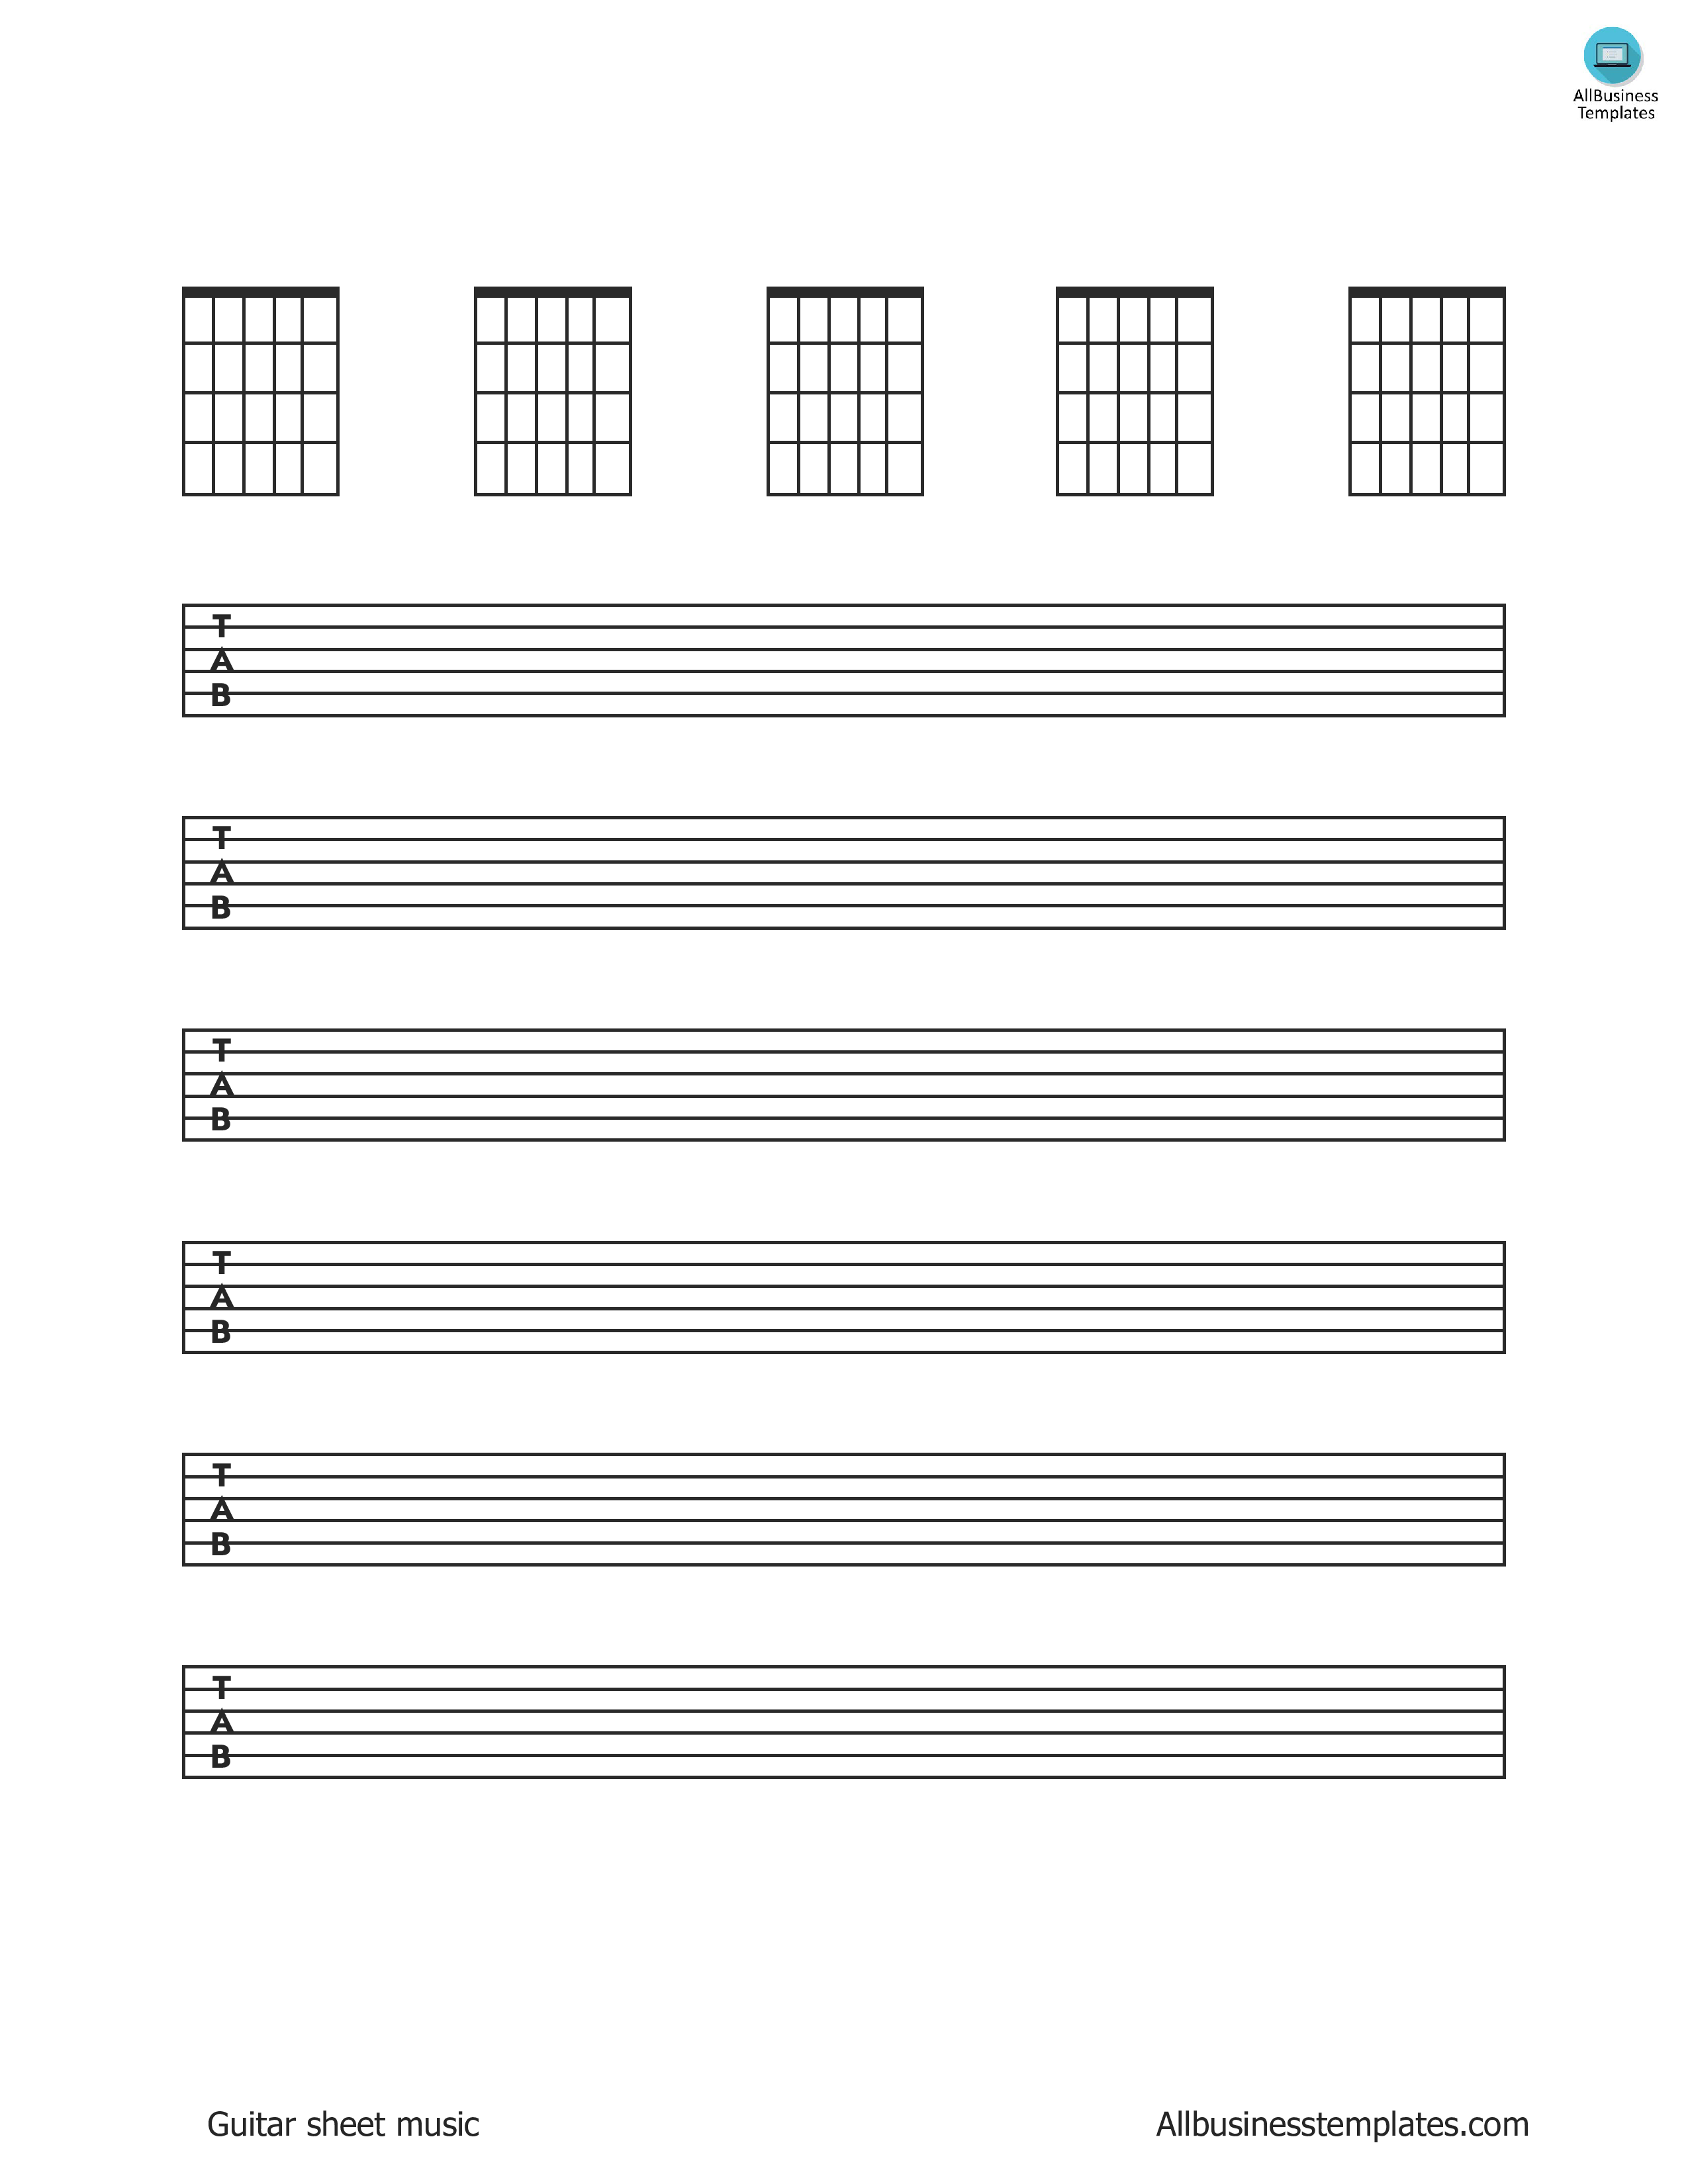 guitar sheet music sheets modèles